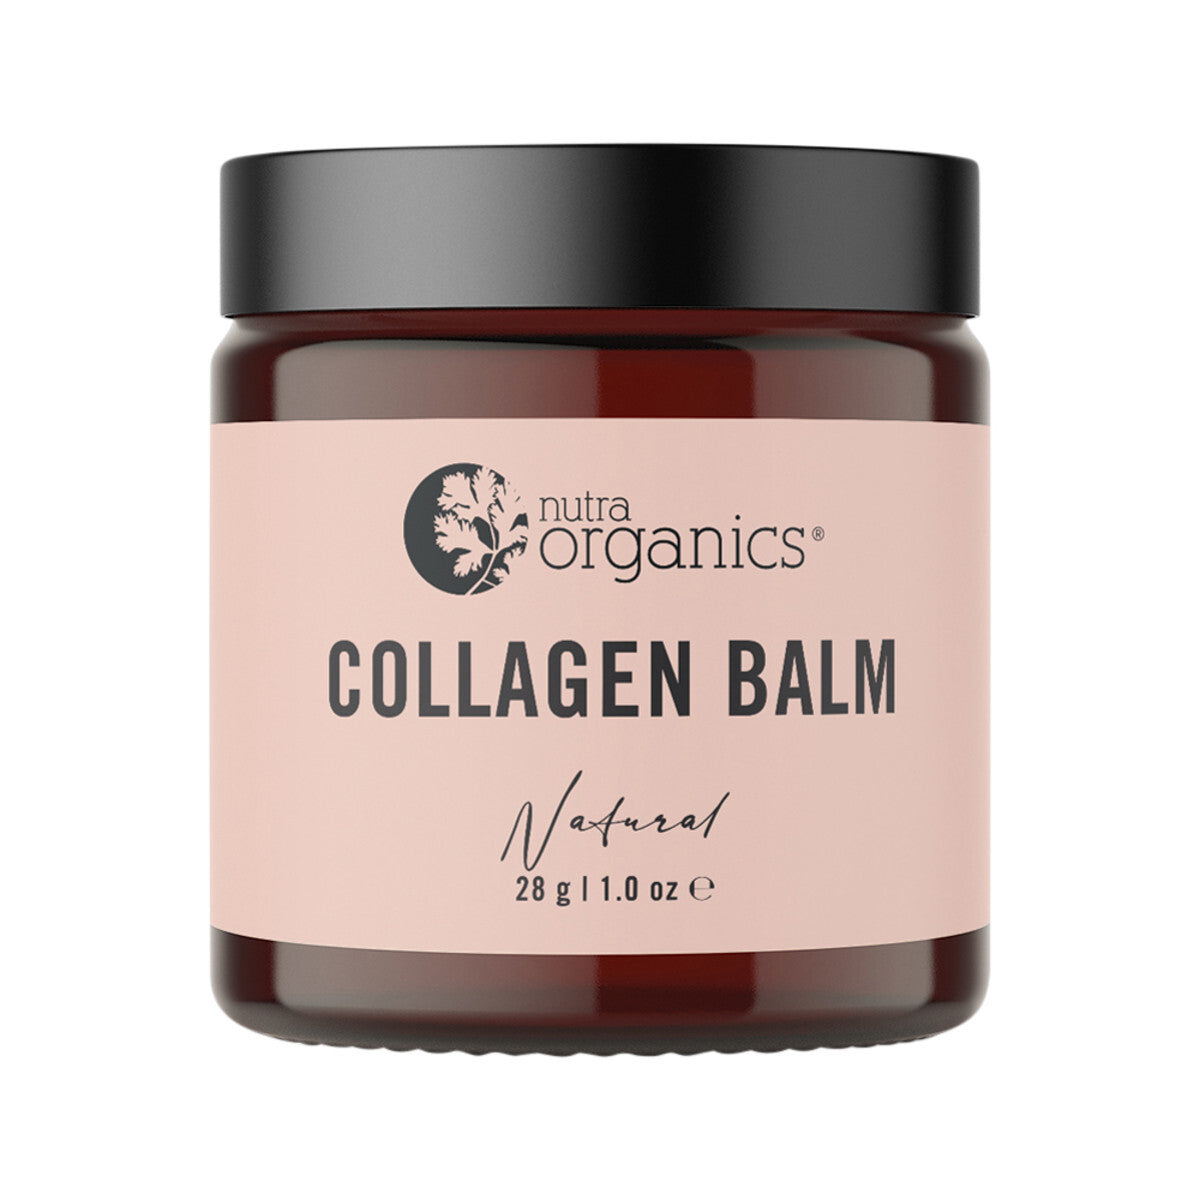 NUTRAORGANICS Collagen Balm - Natural 28g